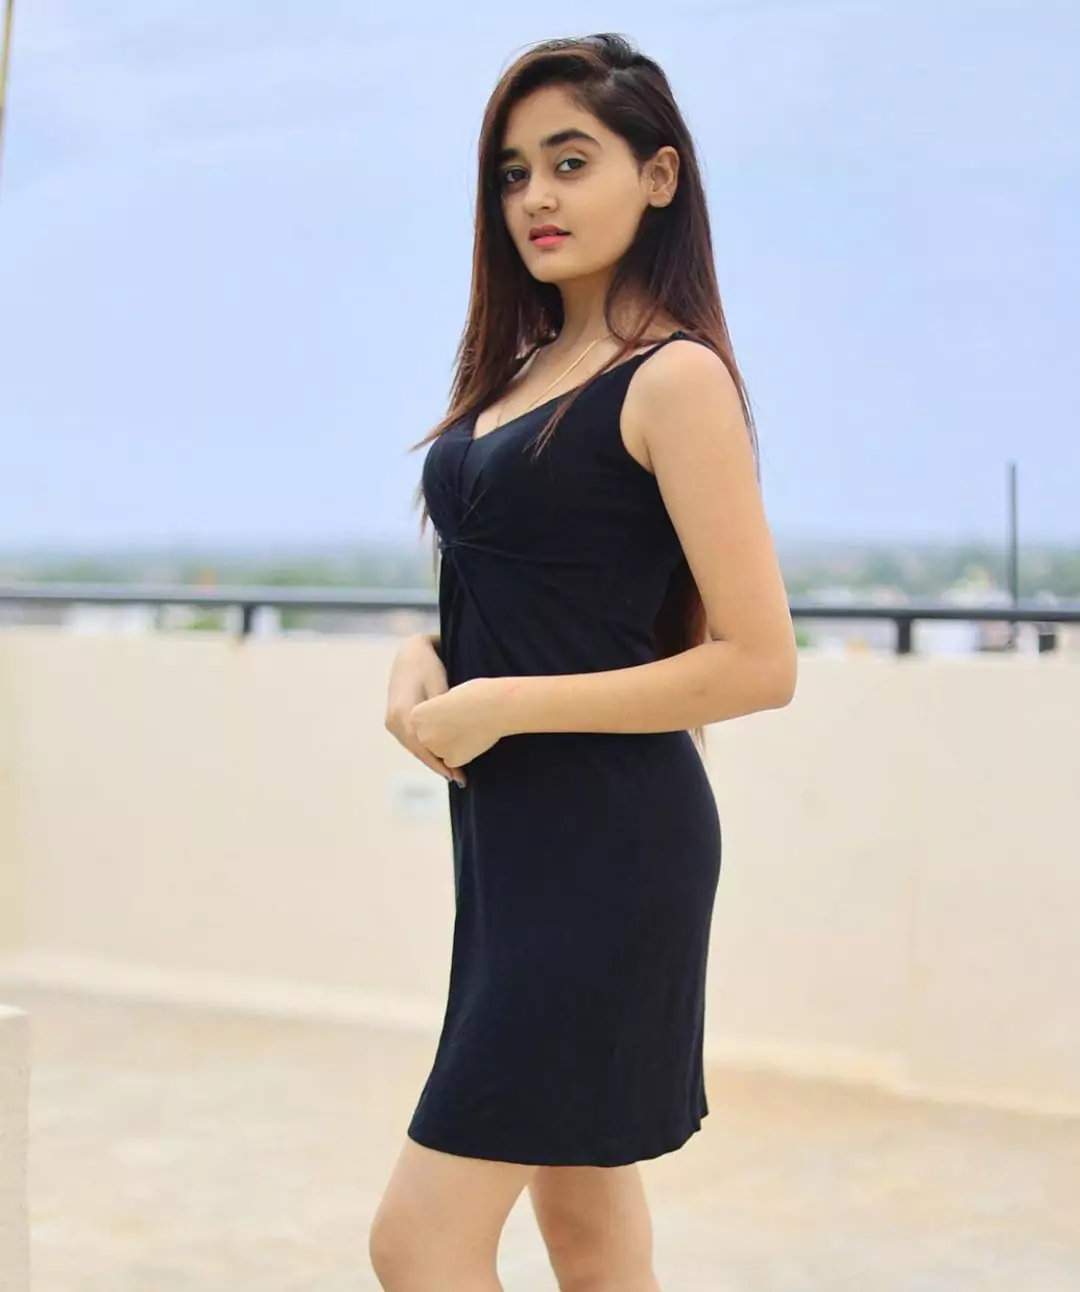 Bindass kavya very sexy hot girl ahmedabad escort independent